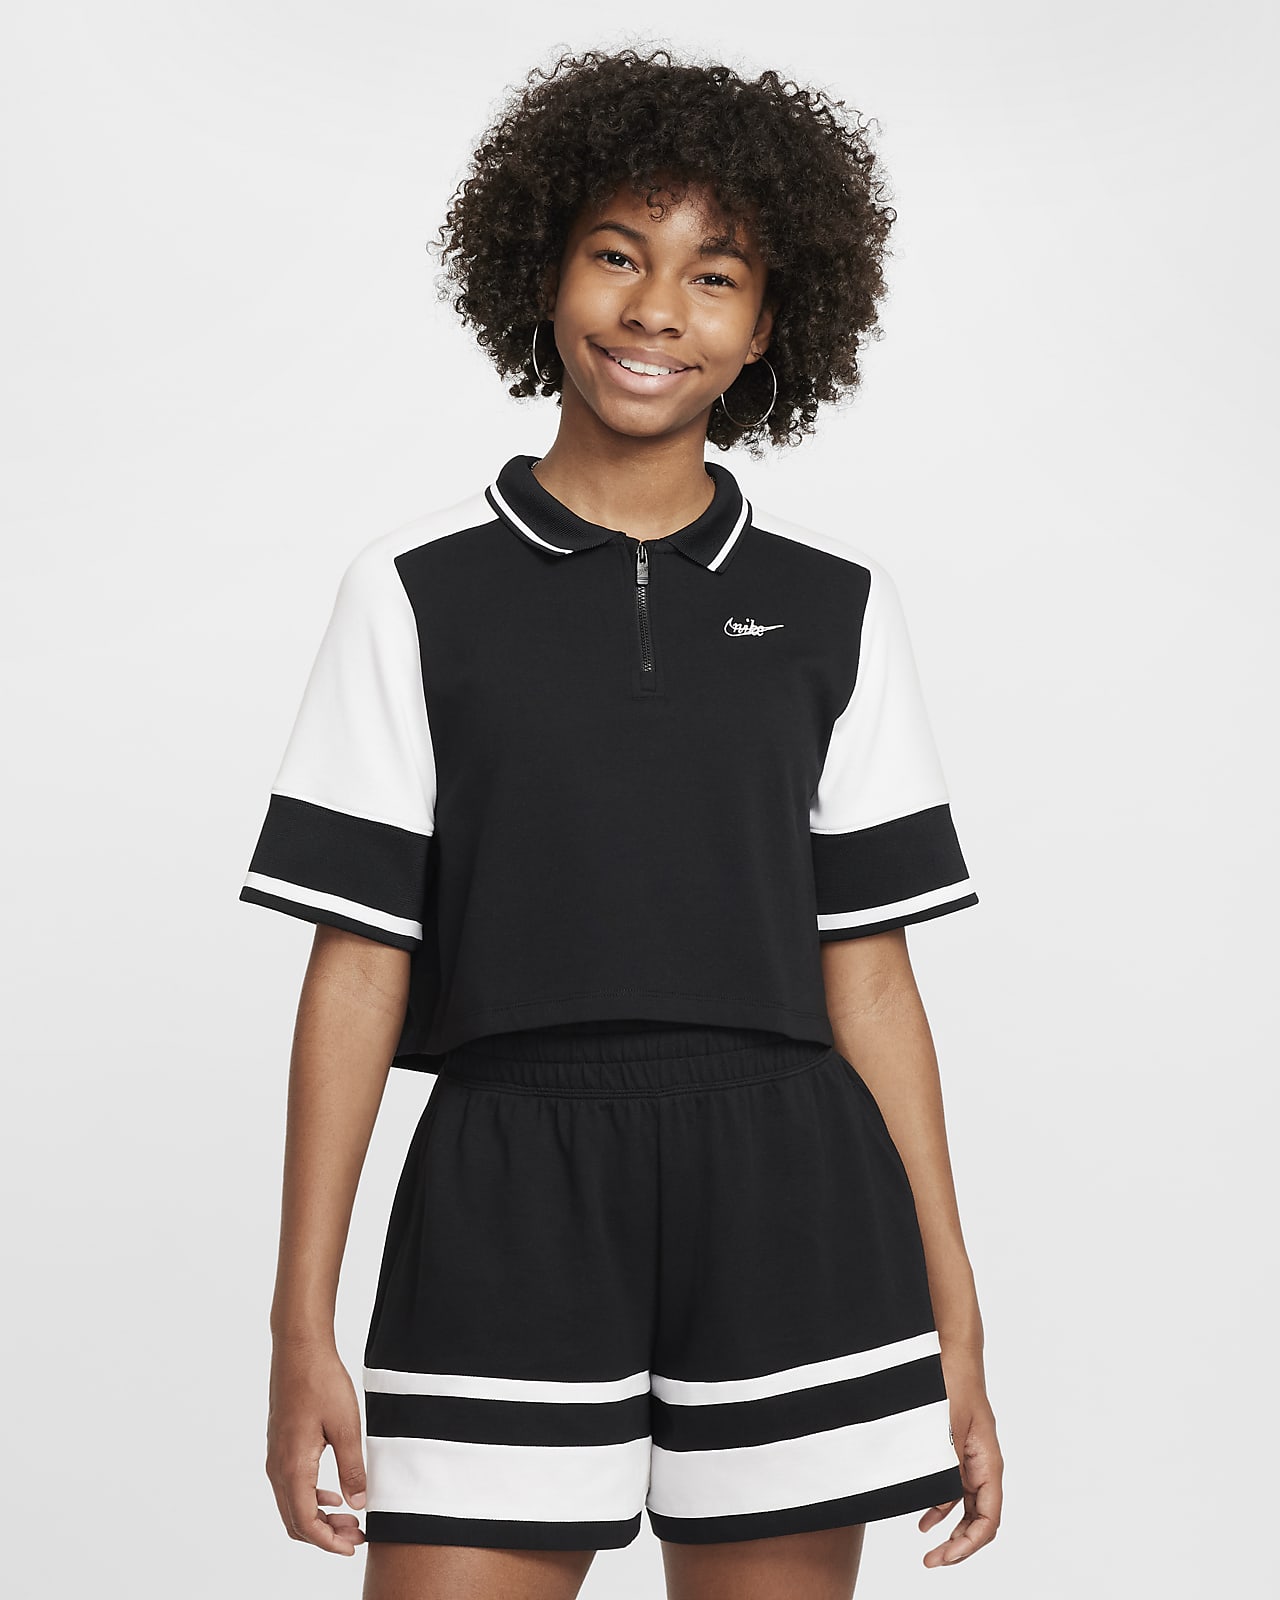 Top ridotto Nike Sportswear - Bambina/Ragazza